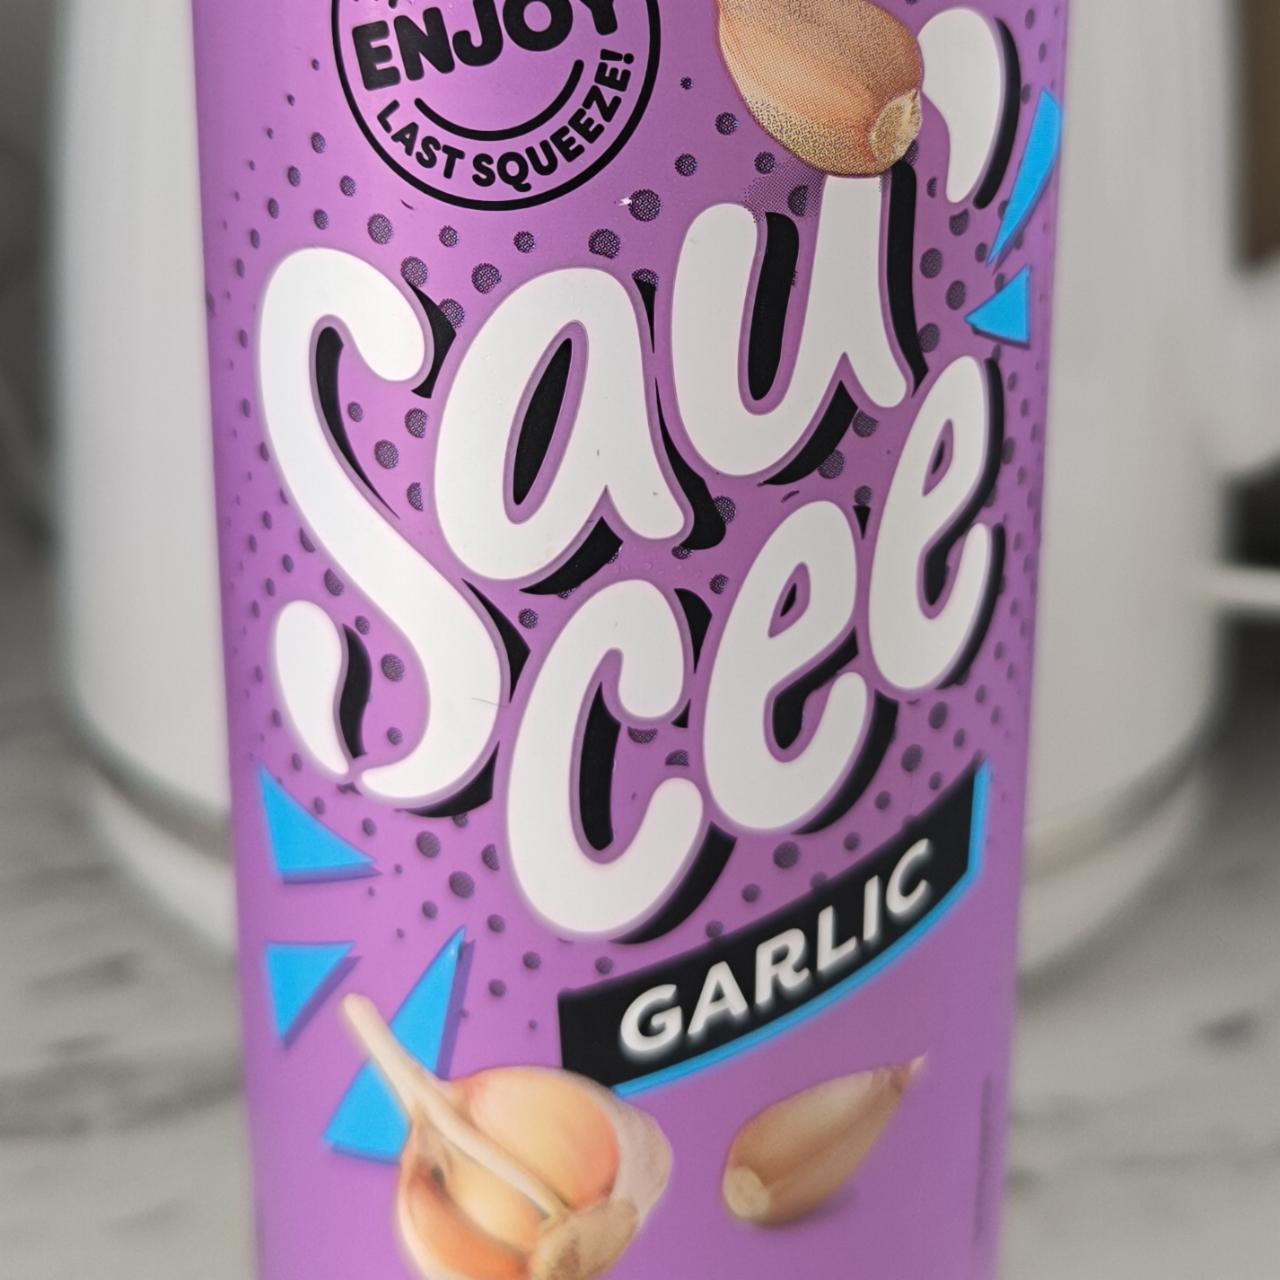 Fotografie - Saucee garlic Enjoy